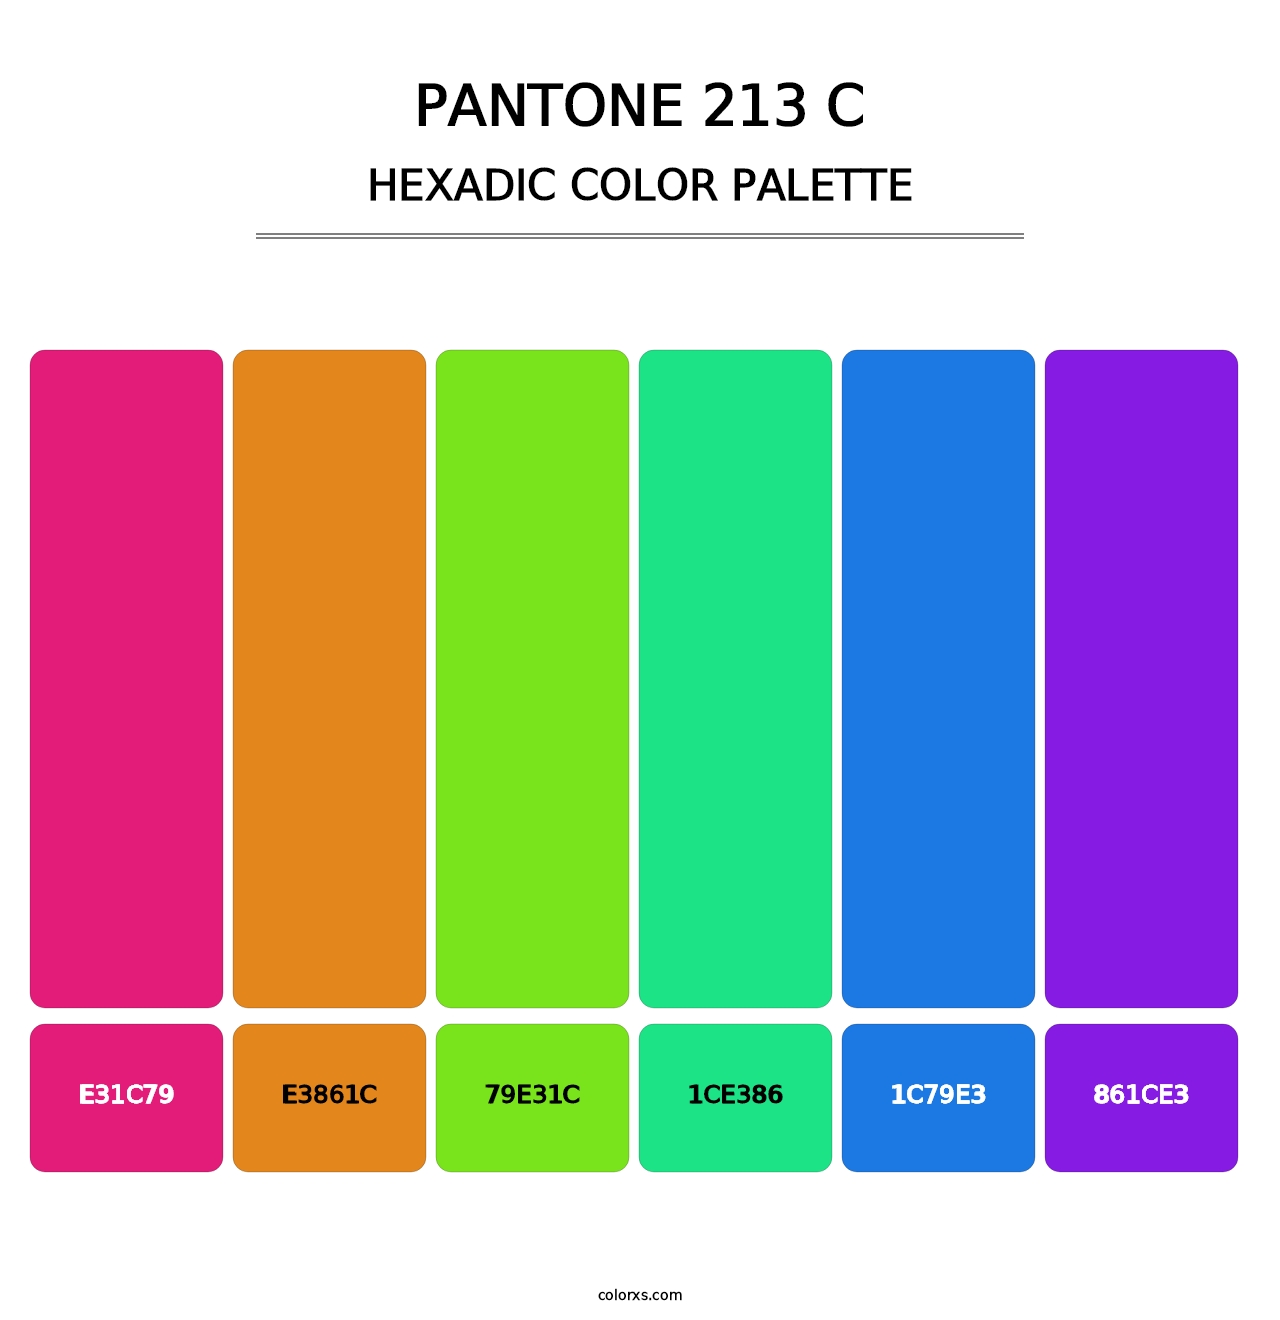 PANTONE 213 C - Hexadic Color Palette